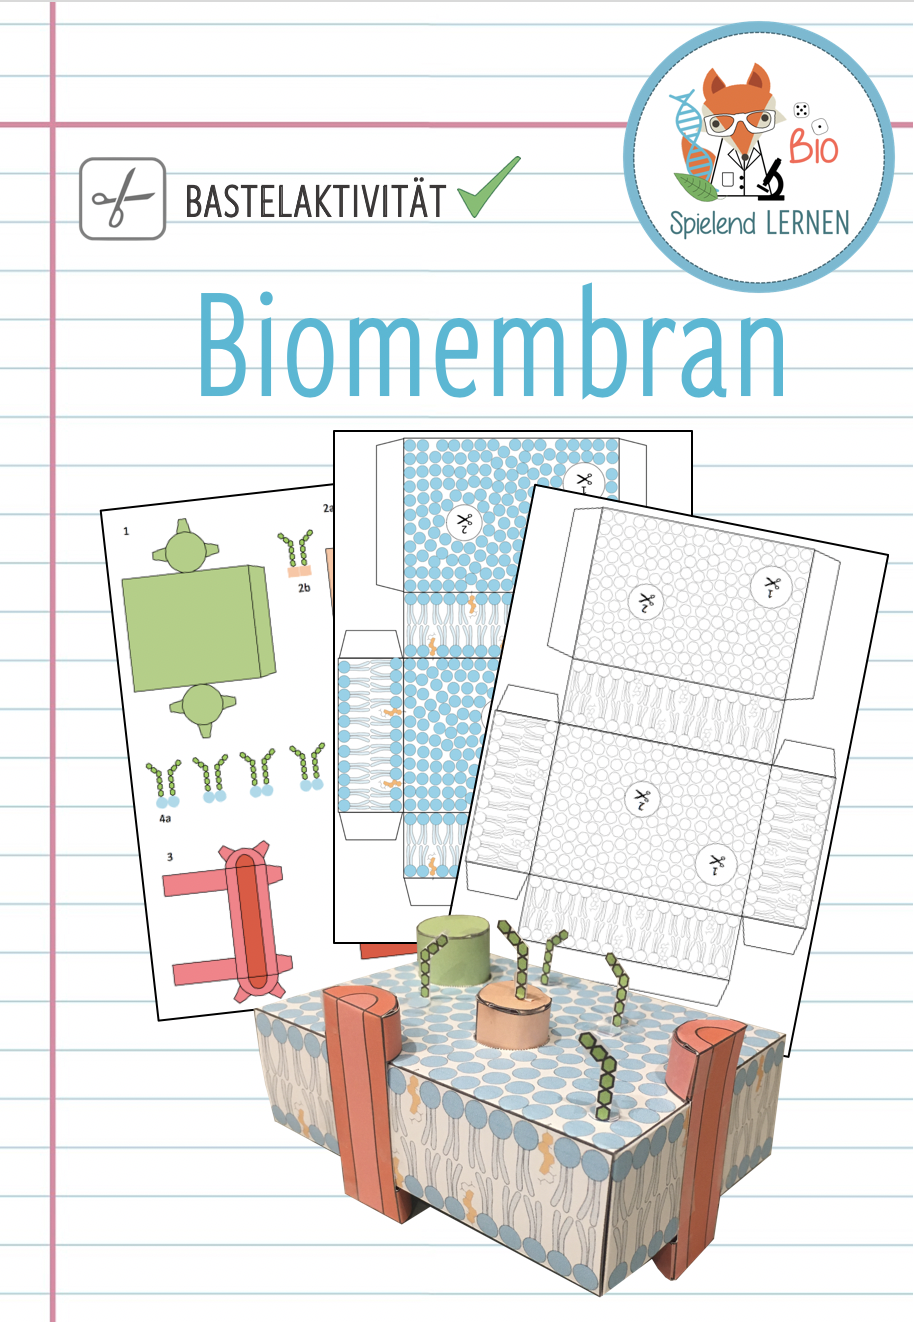 Biomembran Modell Bastelaktivitat Unterrichtsmaterial Im Fach Biologie Biologie Biologie Klassenzimmer Zelltheorie